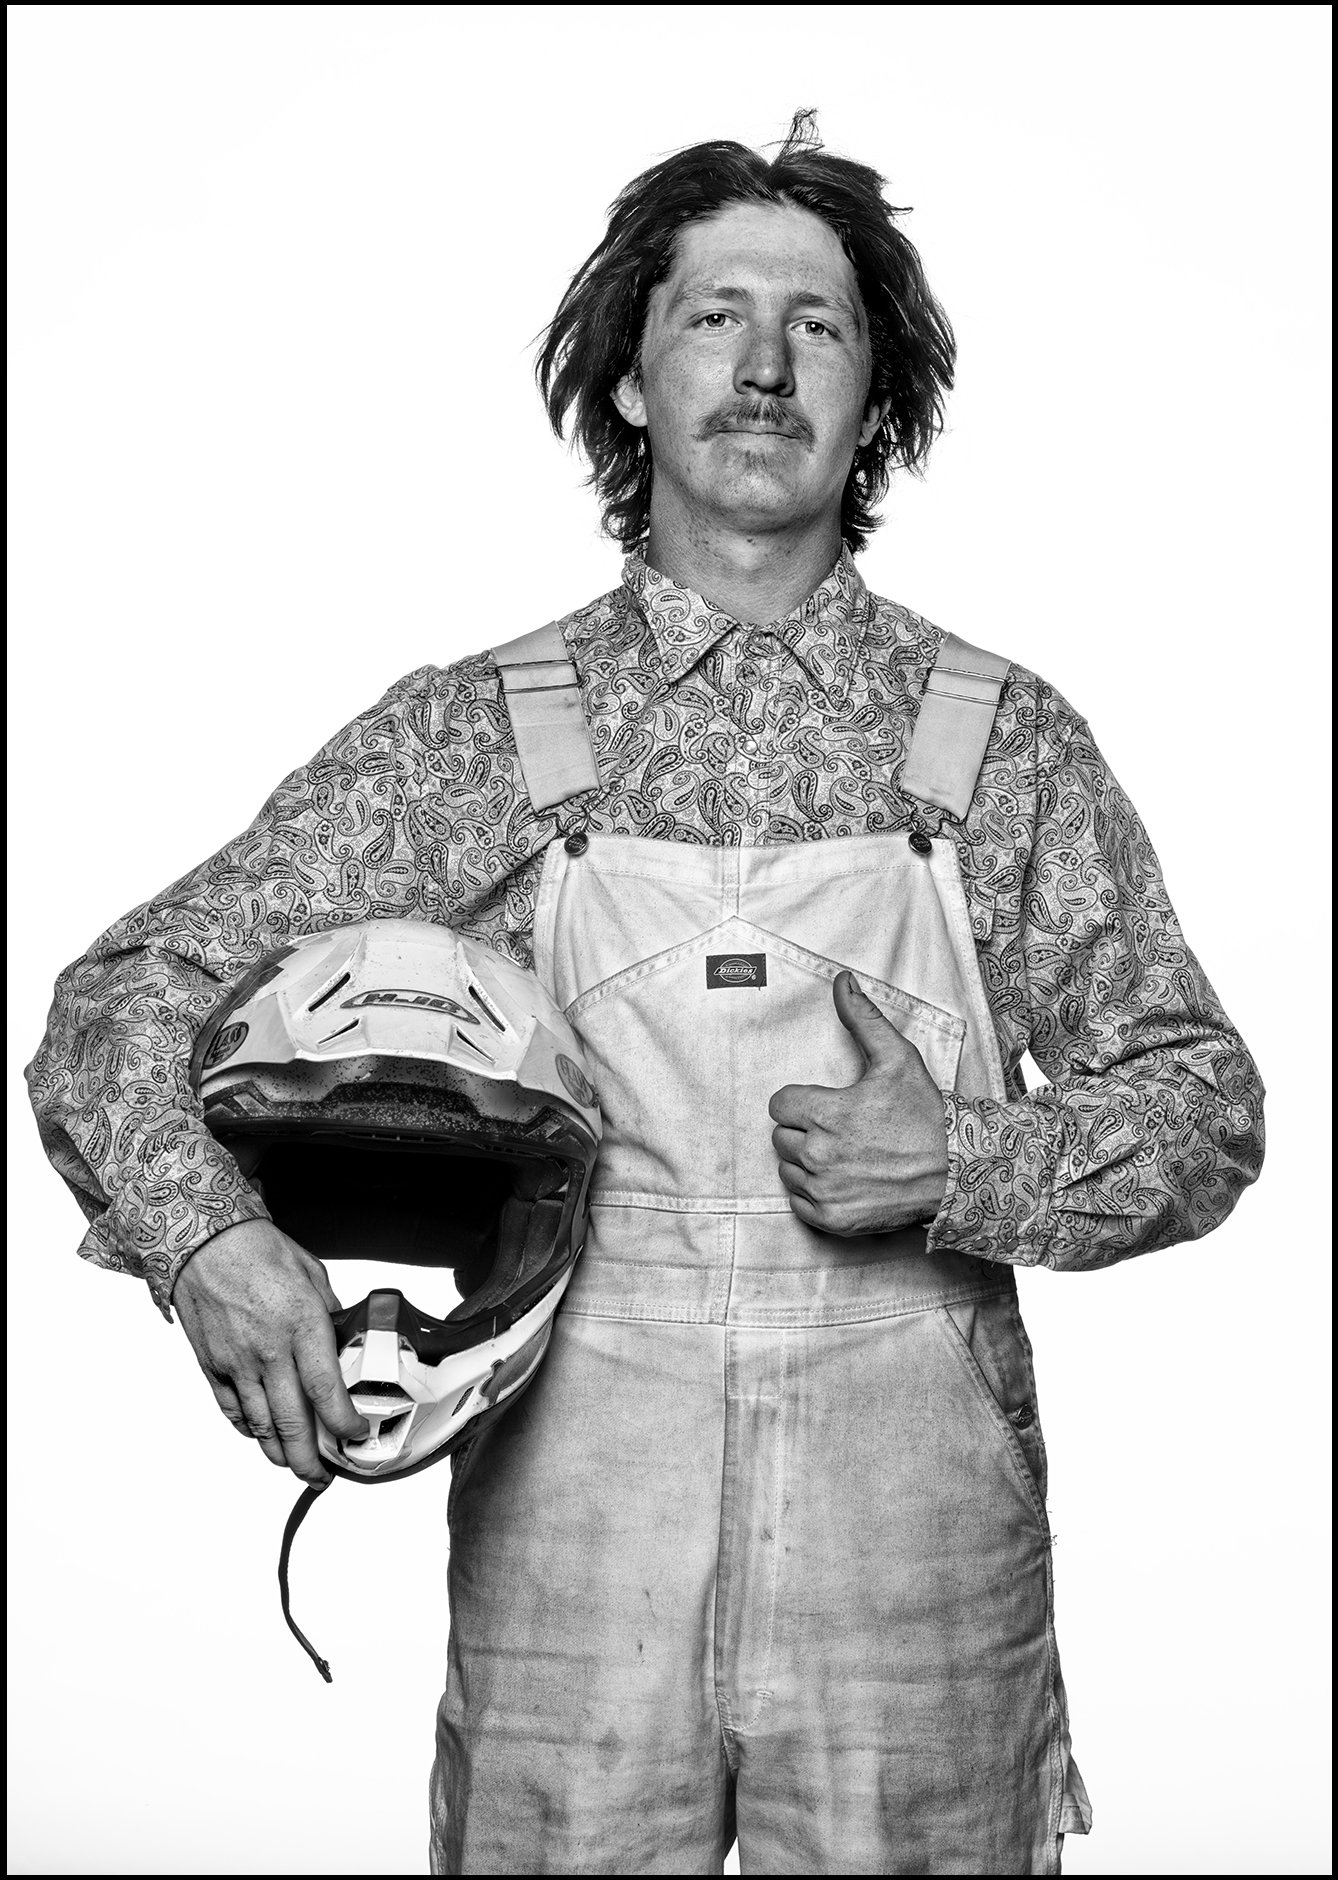 Photo © Albert Ewing-Paisley Shirt-Thumbs Up-White Overalls-Flat Track Racer_DSF7862.jpg